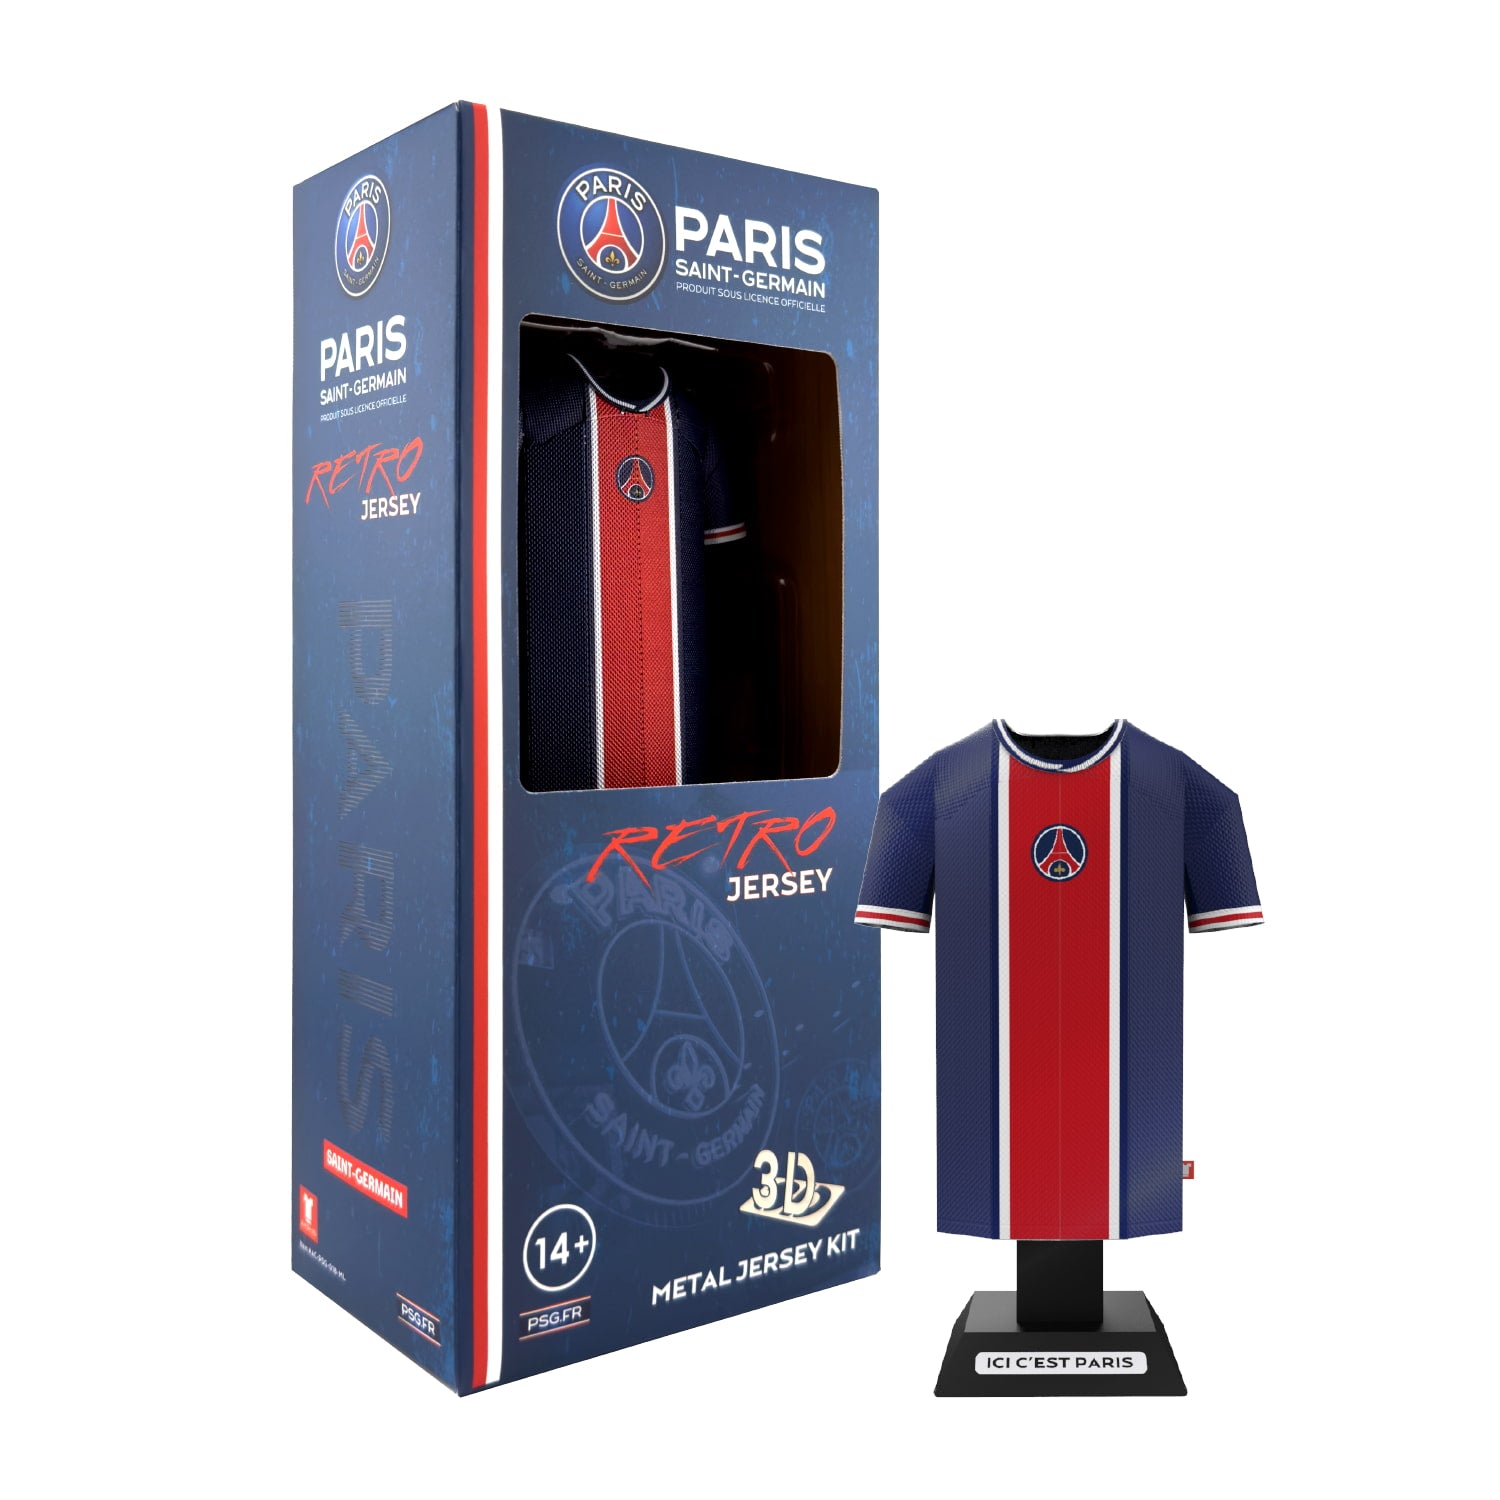 PSG Retro Jersey in locker packaging